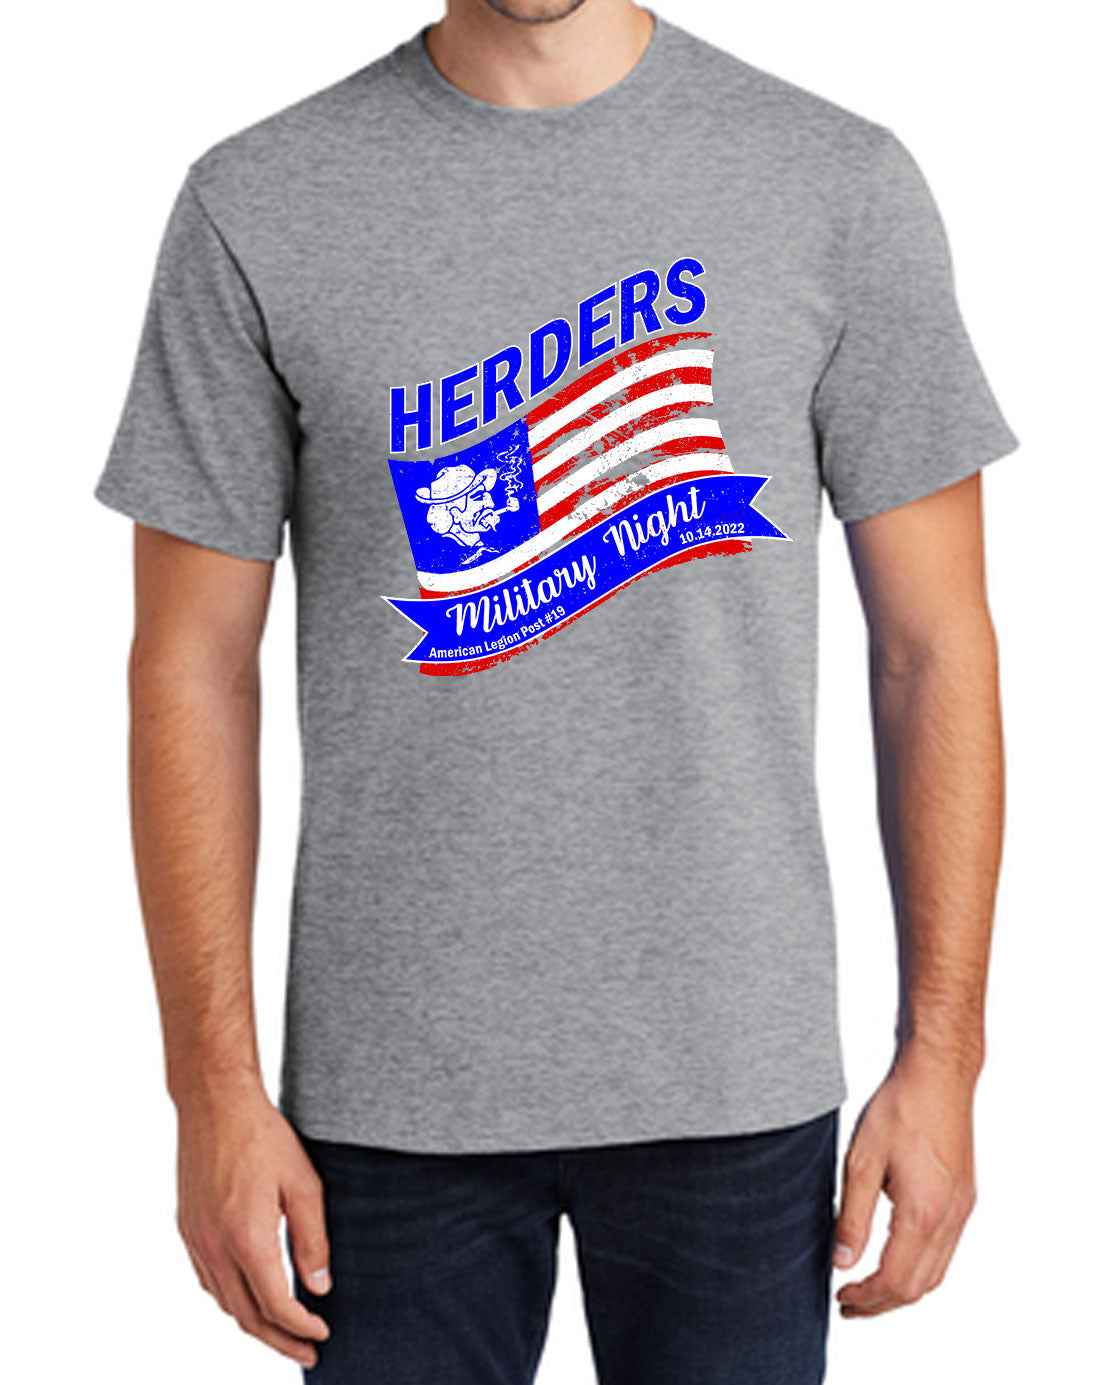 Mens Athletic Heather Herders Legion Military Night T-Shirt